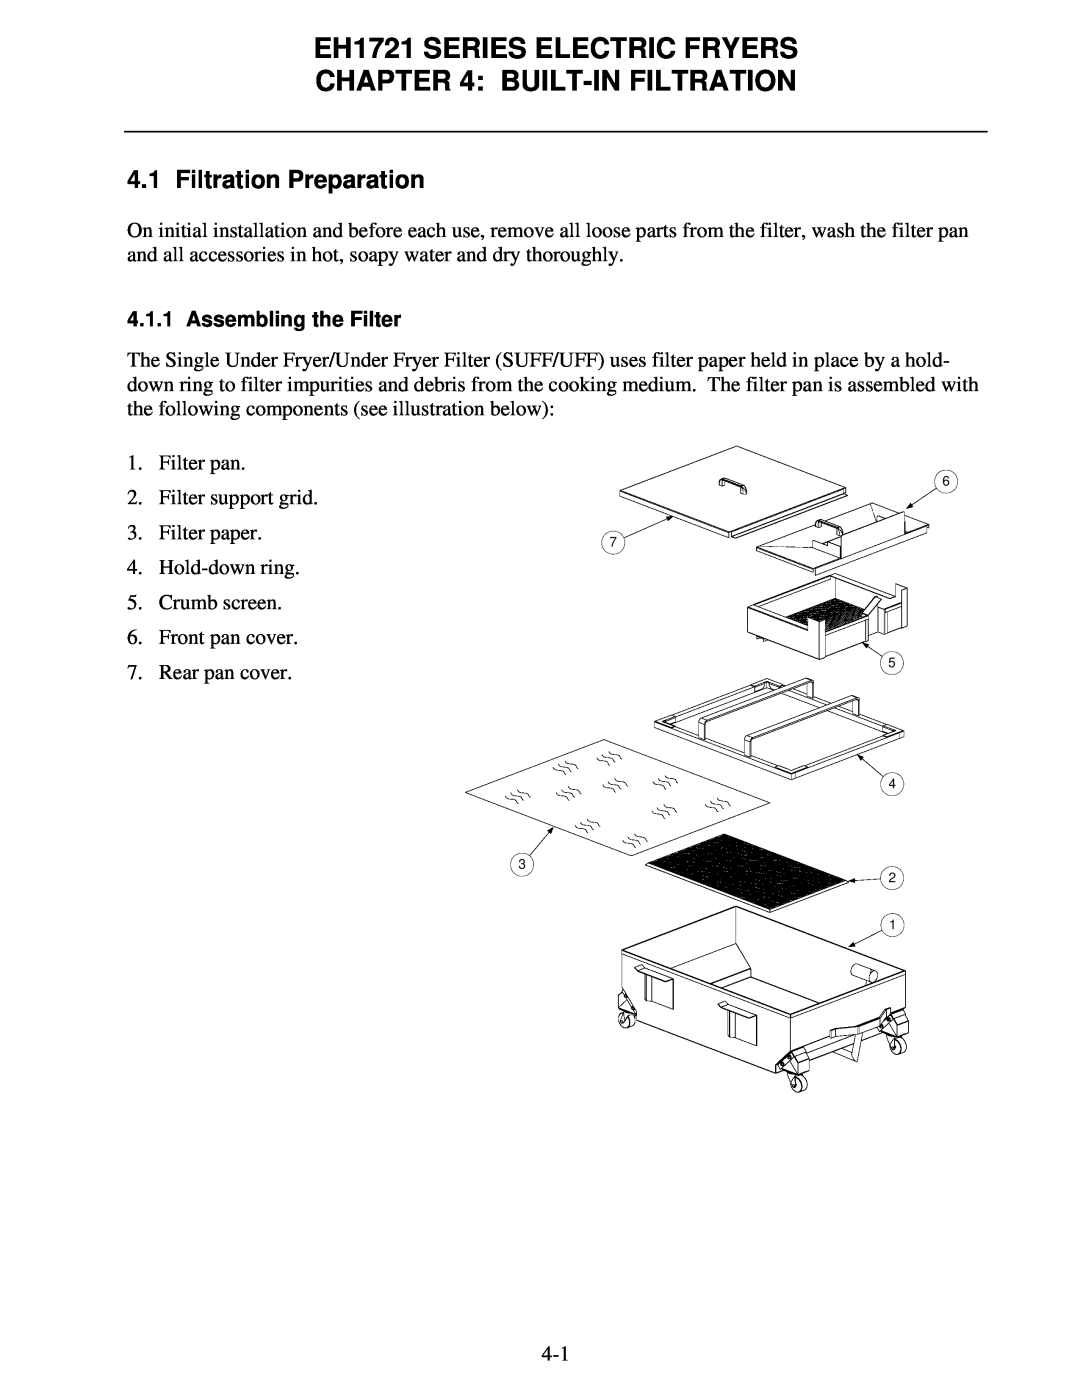 Frymaster BIH1721, FPH1721 operation manual EH1721 SERIES ELECTRIC FRYERS BUILT-IN FILTRATION, Filtration Preparation 